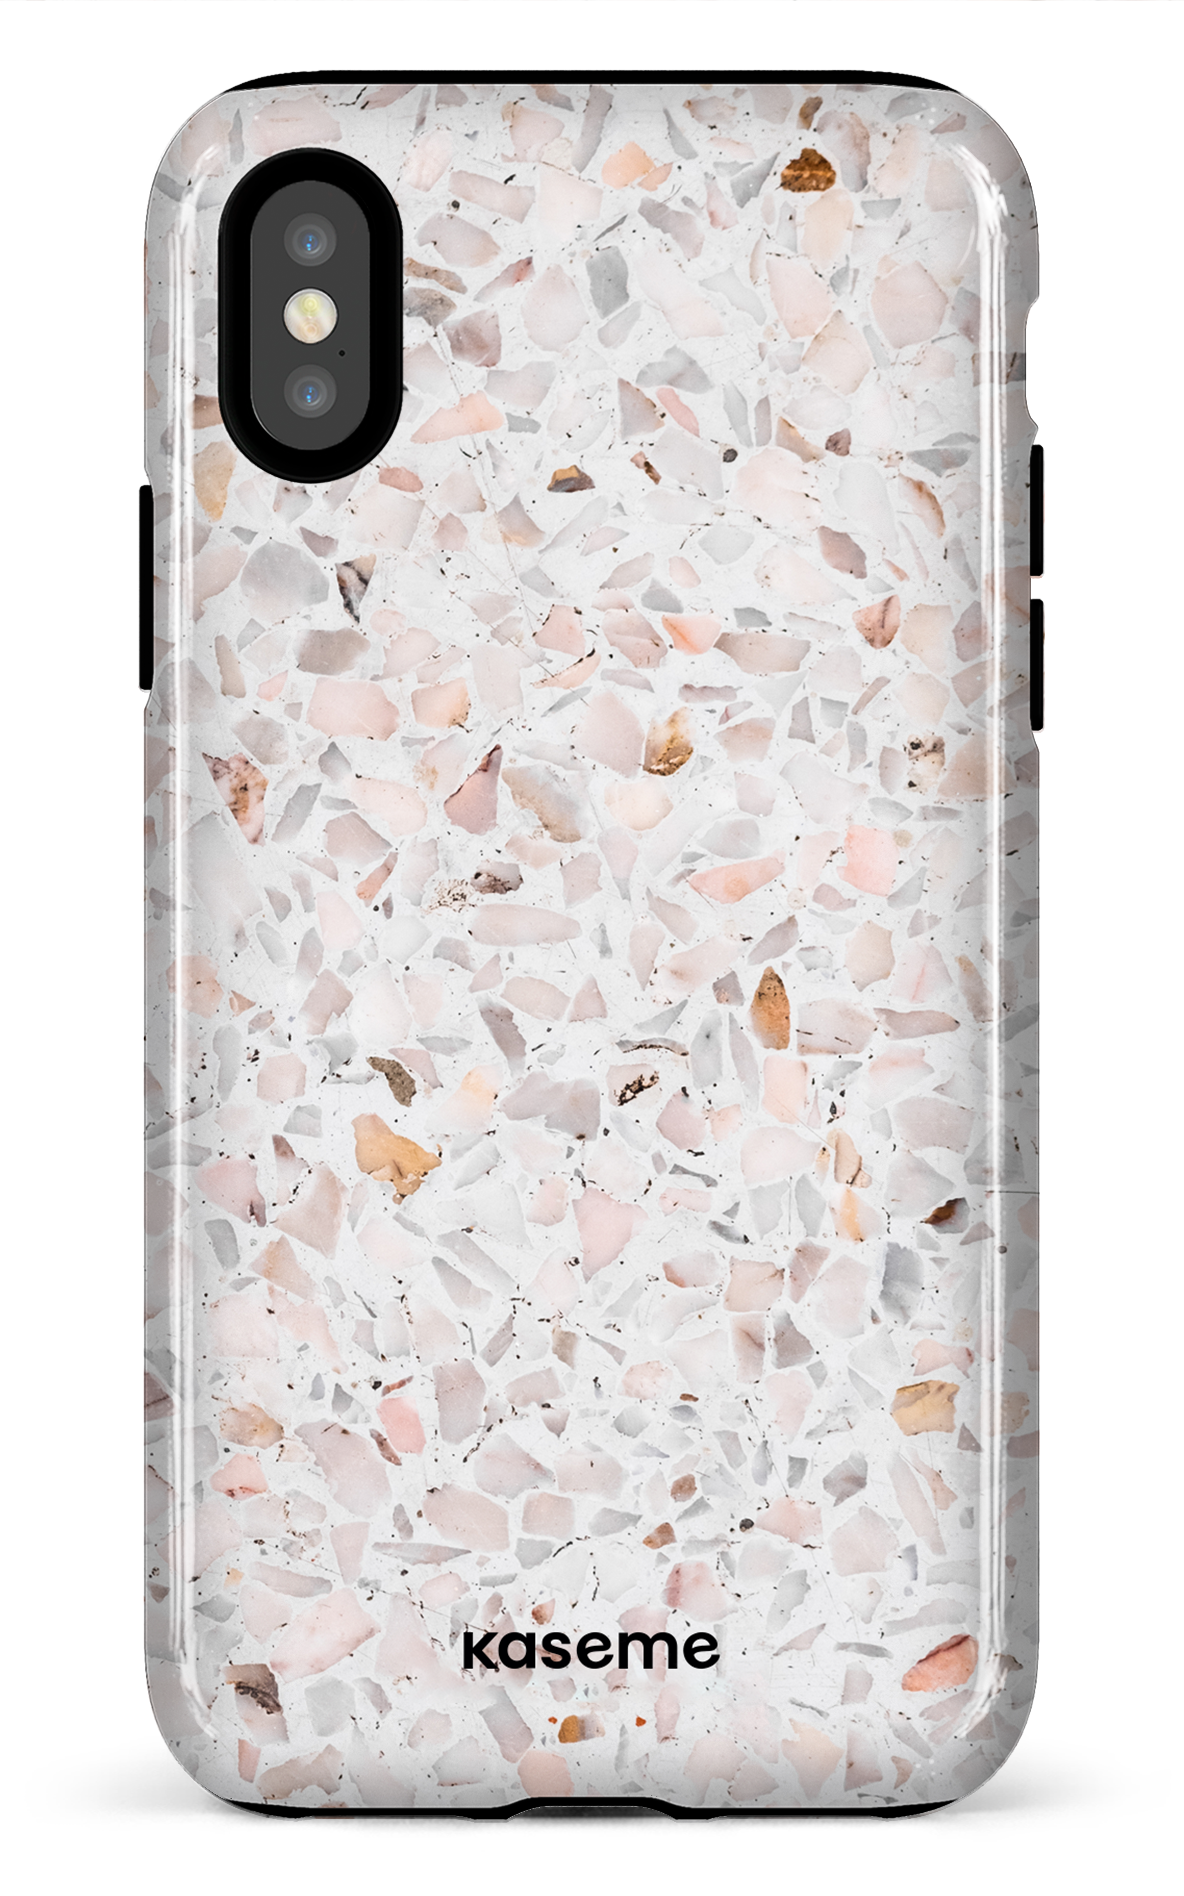 Frozen stone - iPhone X/XS